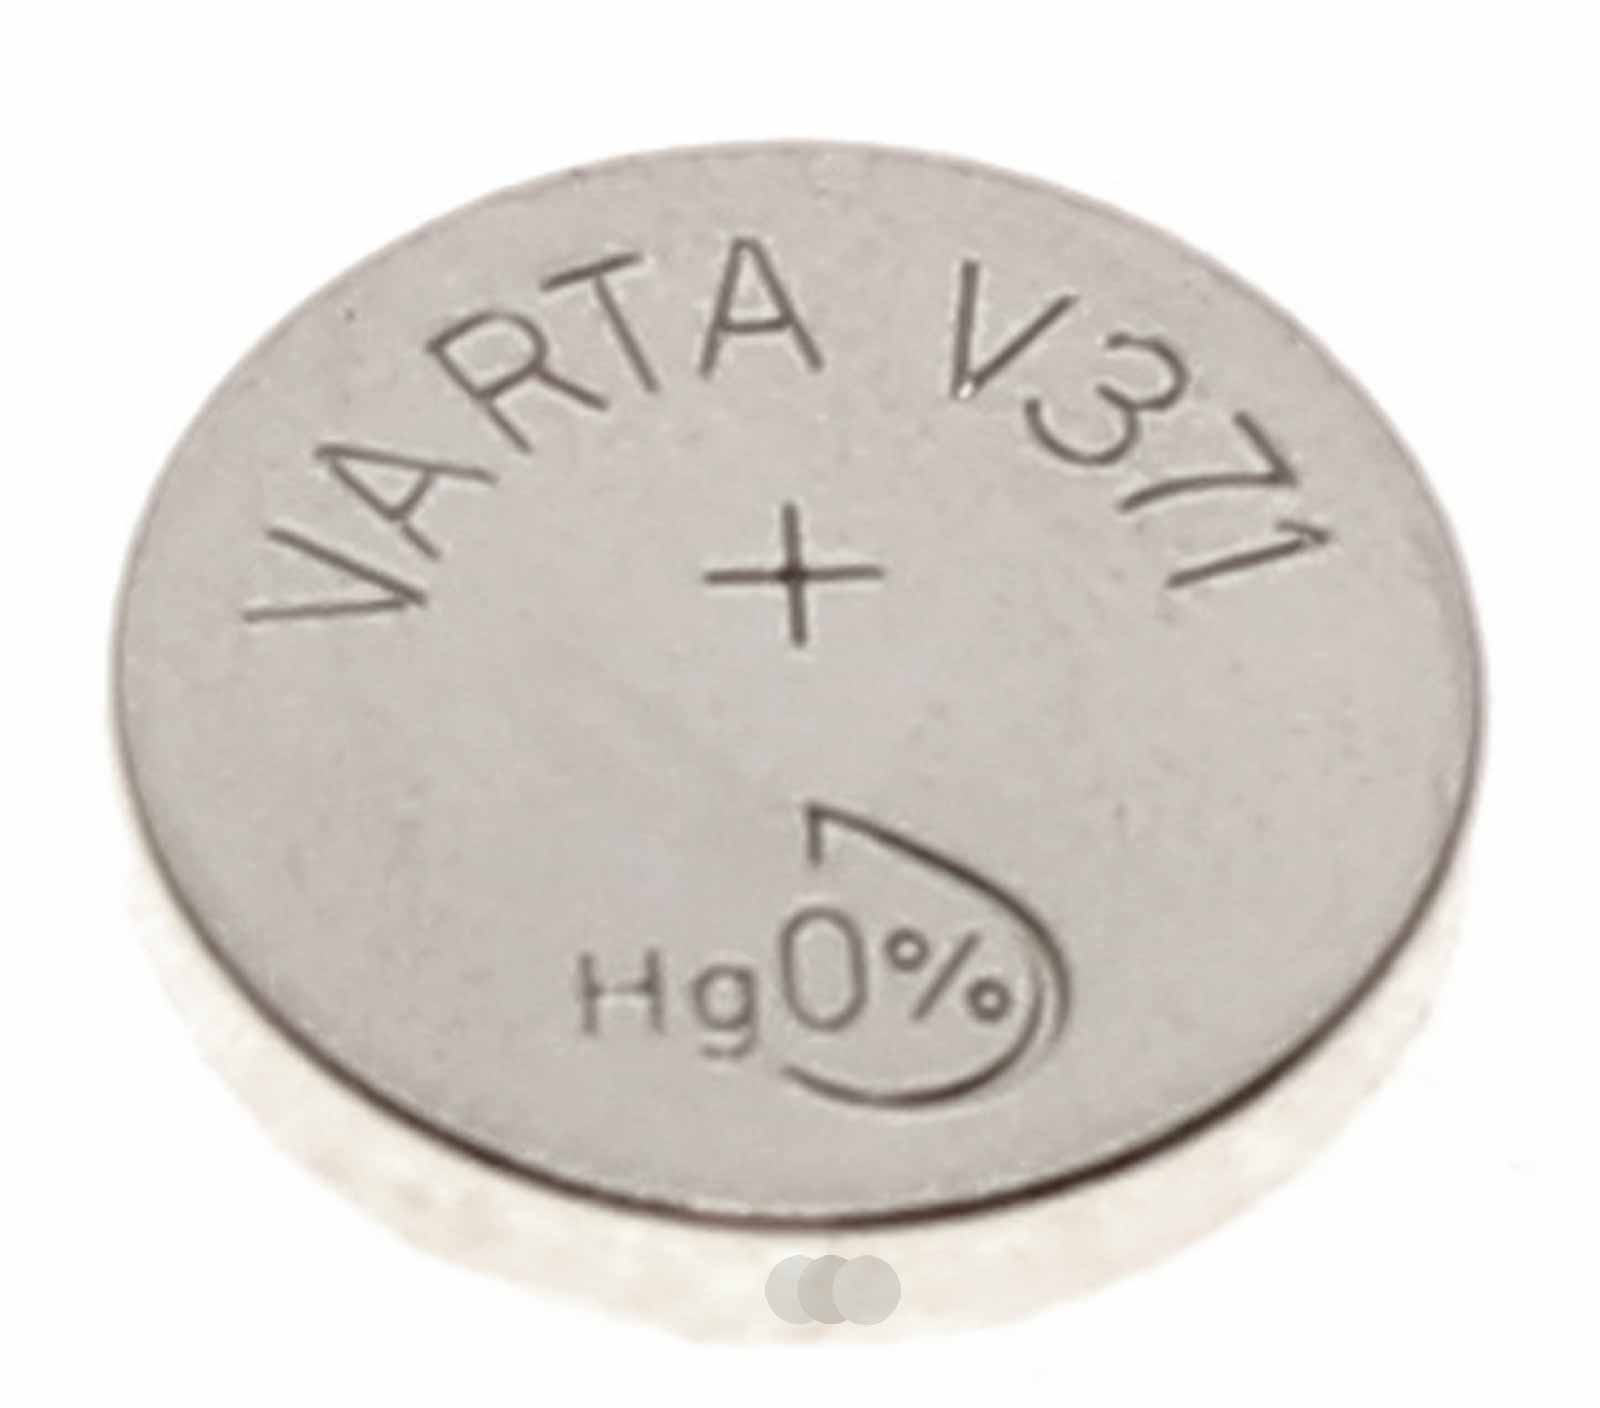 Varta V371 Knopfzelle Batterie Silberoxid für Uhren u.a., wie SR69, SR921, SR920SW, BULK, 1,55V, 30mAh